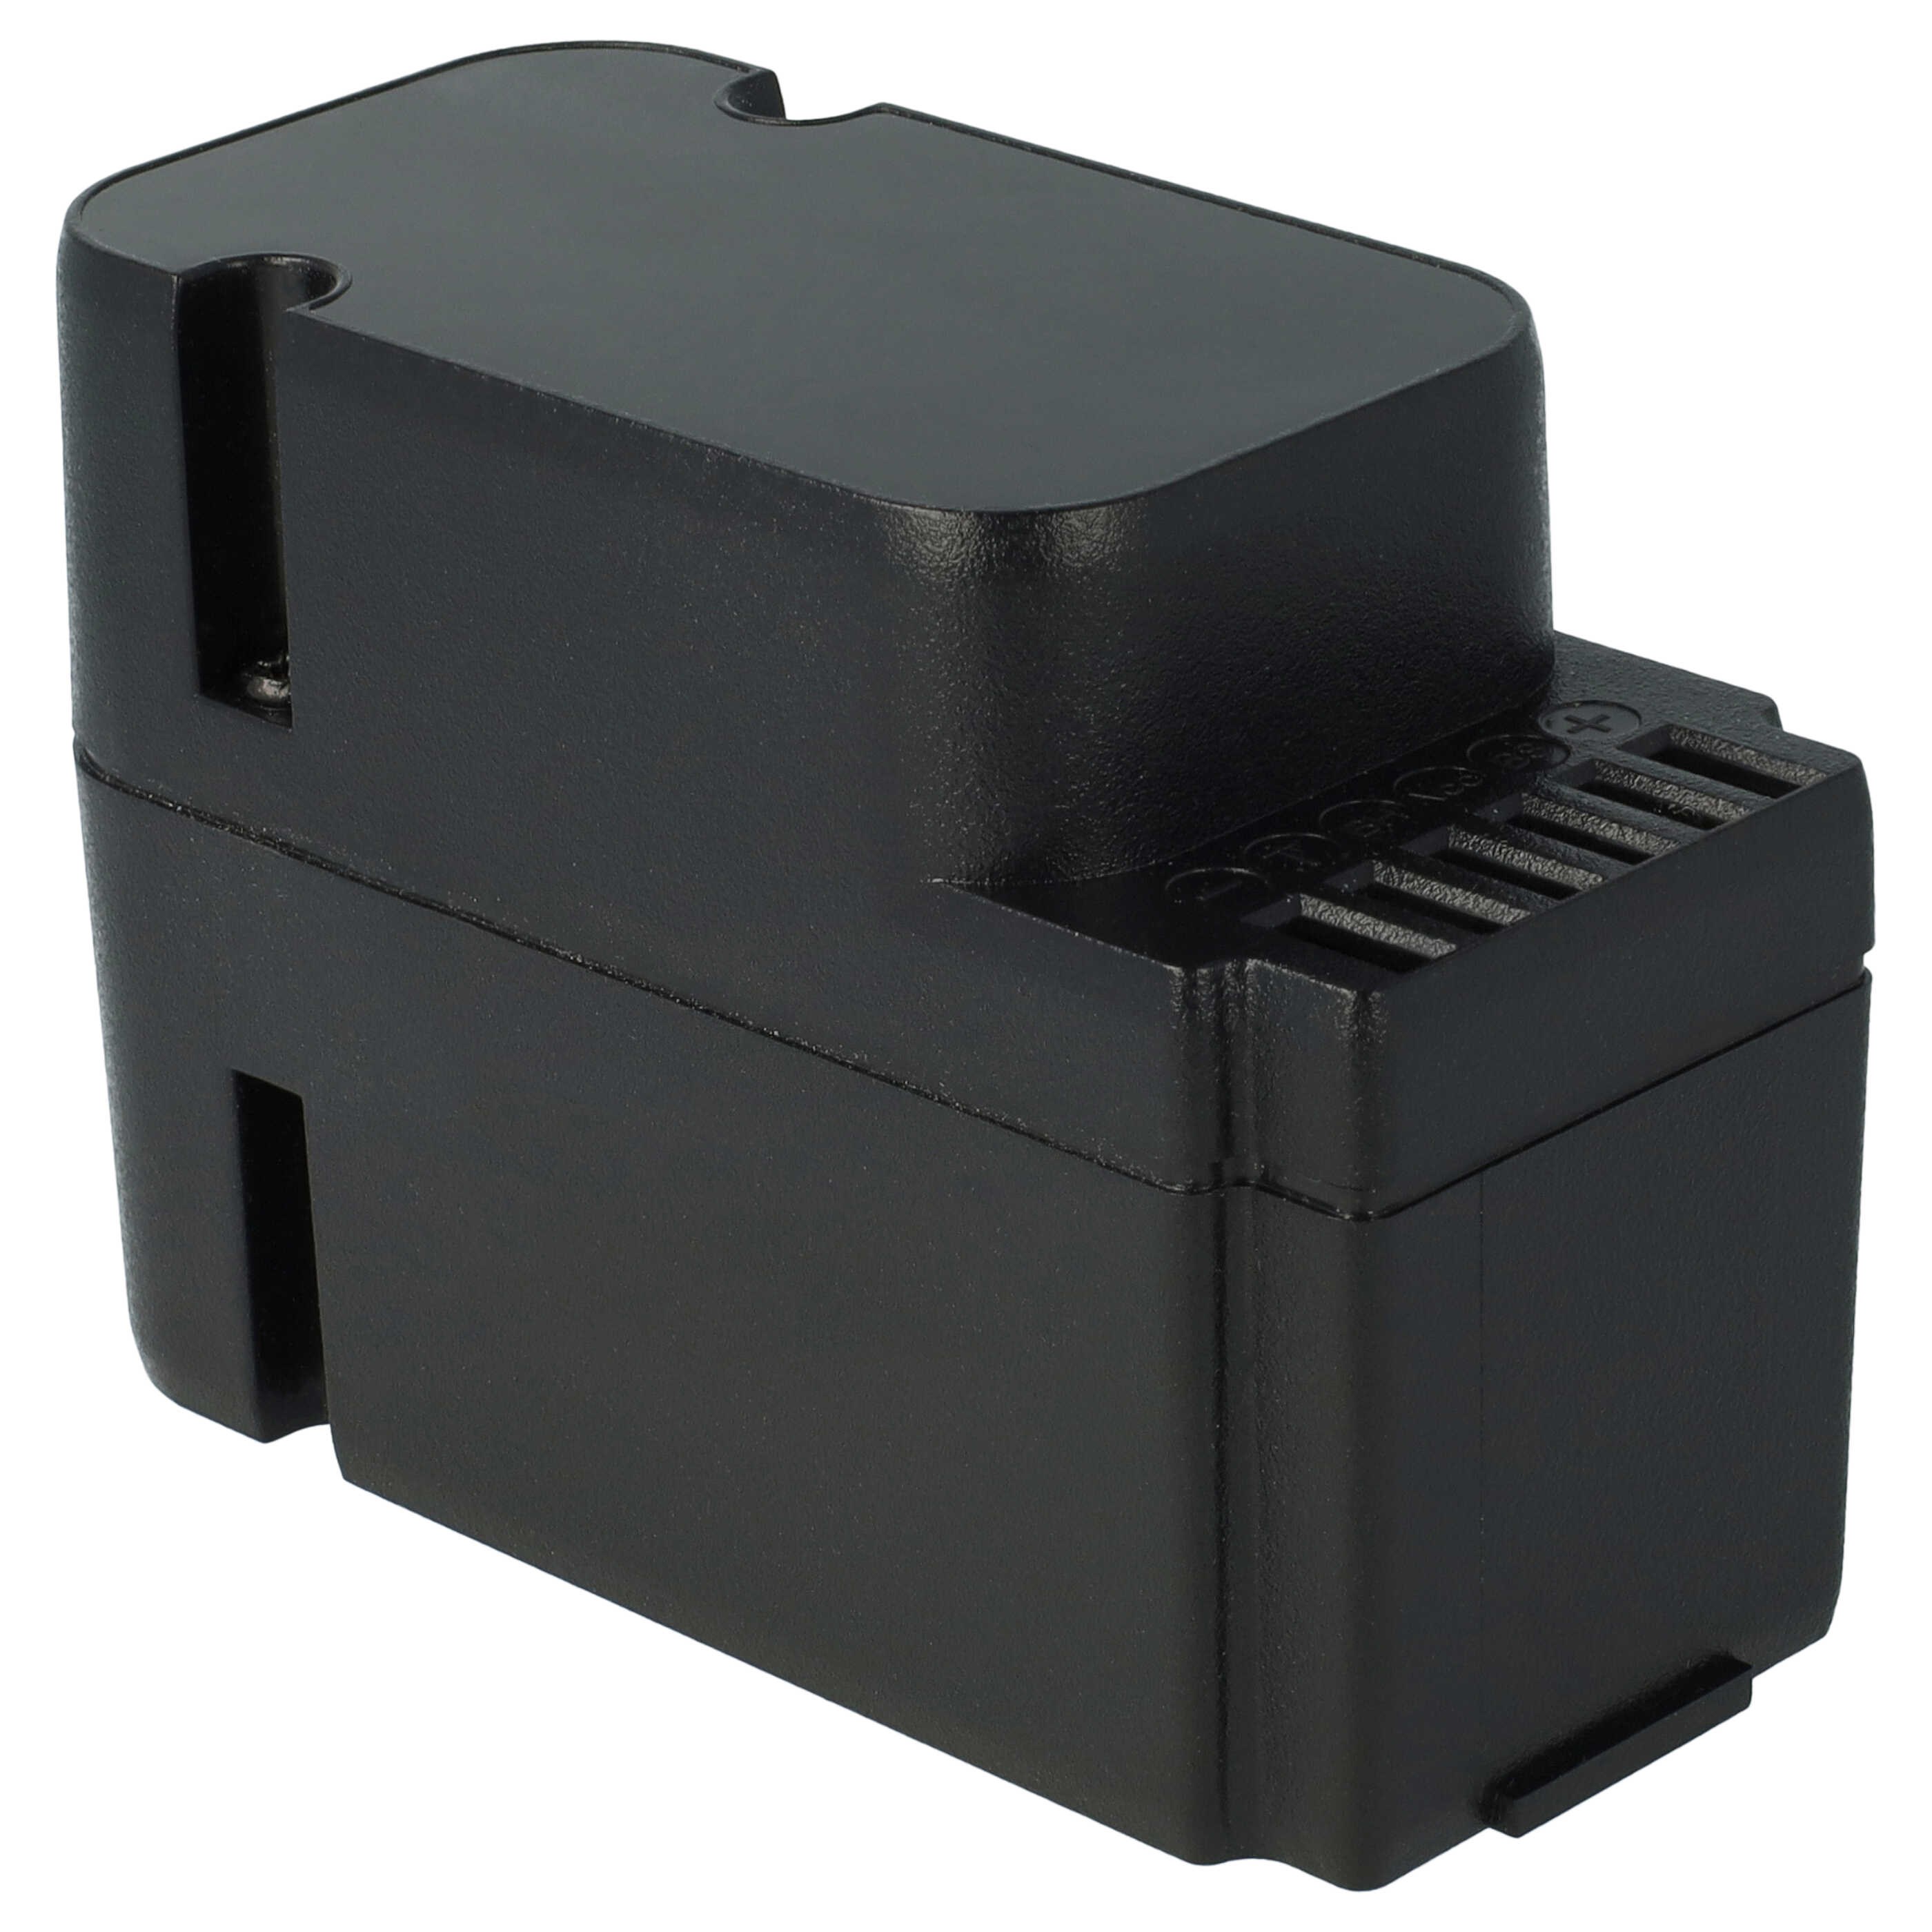 Lawnmower Replacement Battery for Worx WA3225, WA3565 - 2000mAh 28V Li-Ion, black